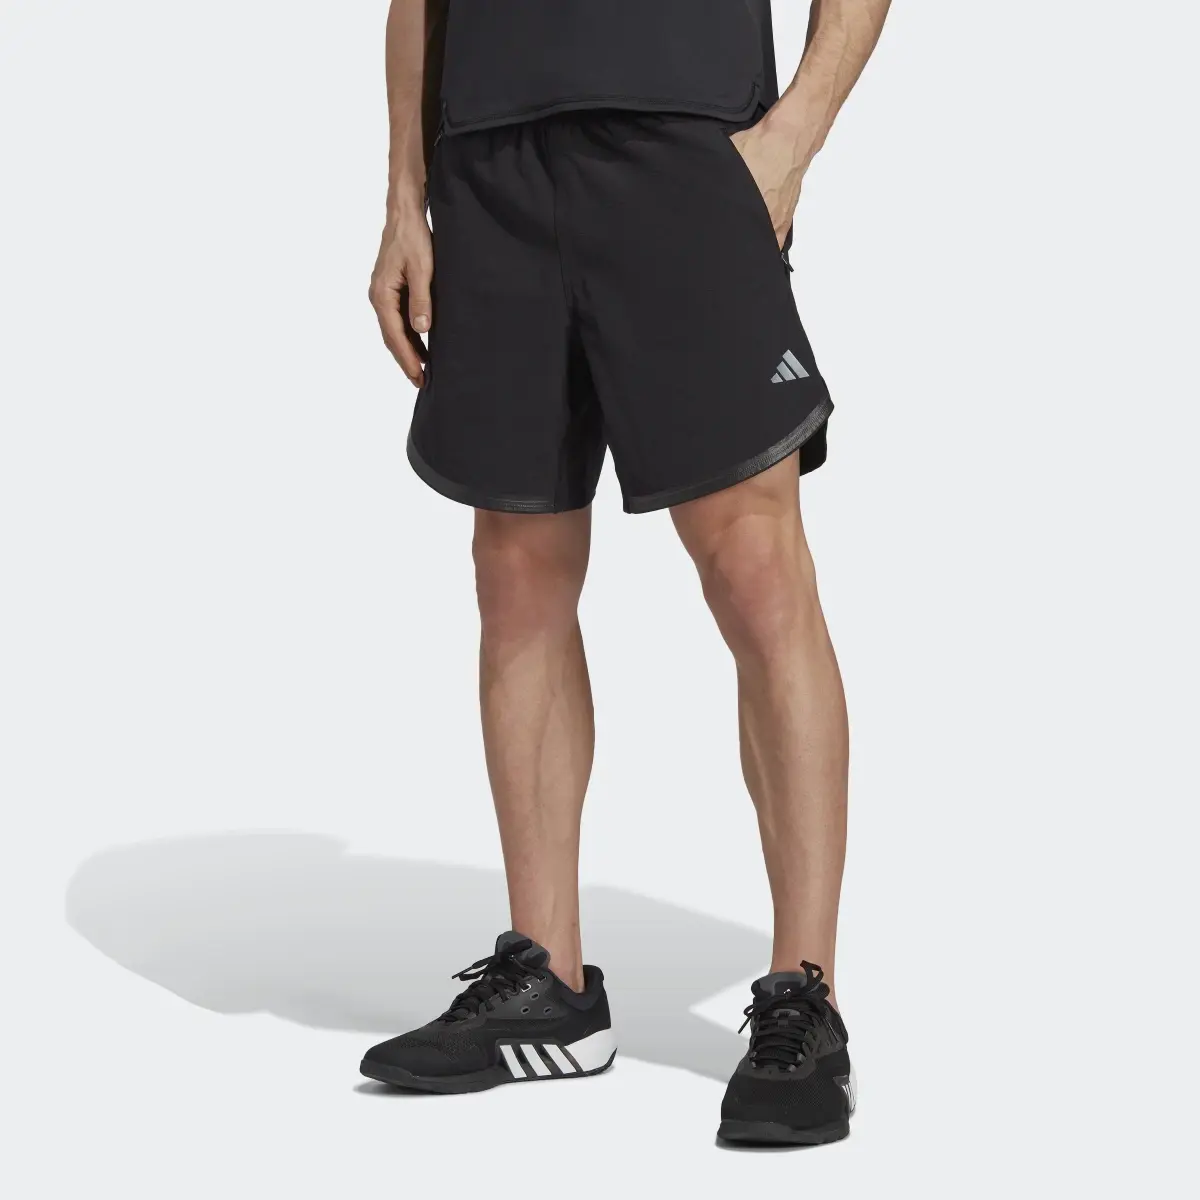 Adidas Short Designed 4 Training CORDURA® Workout. 1